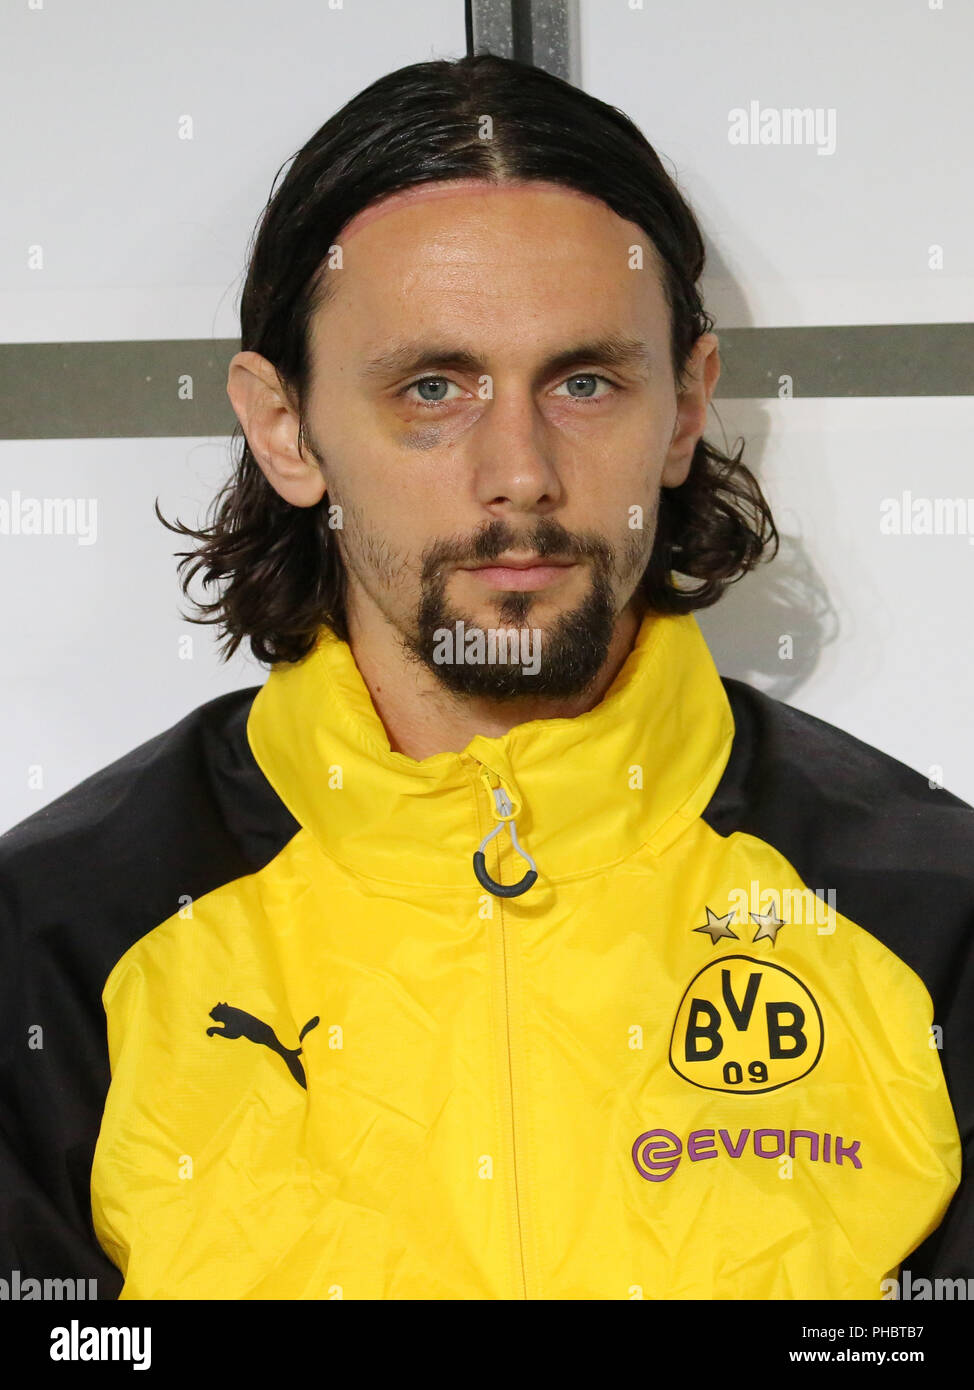 Neven Subotic (Borussia Dortmund) Stockfoto